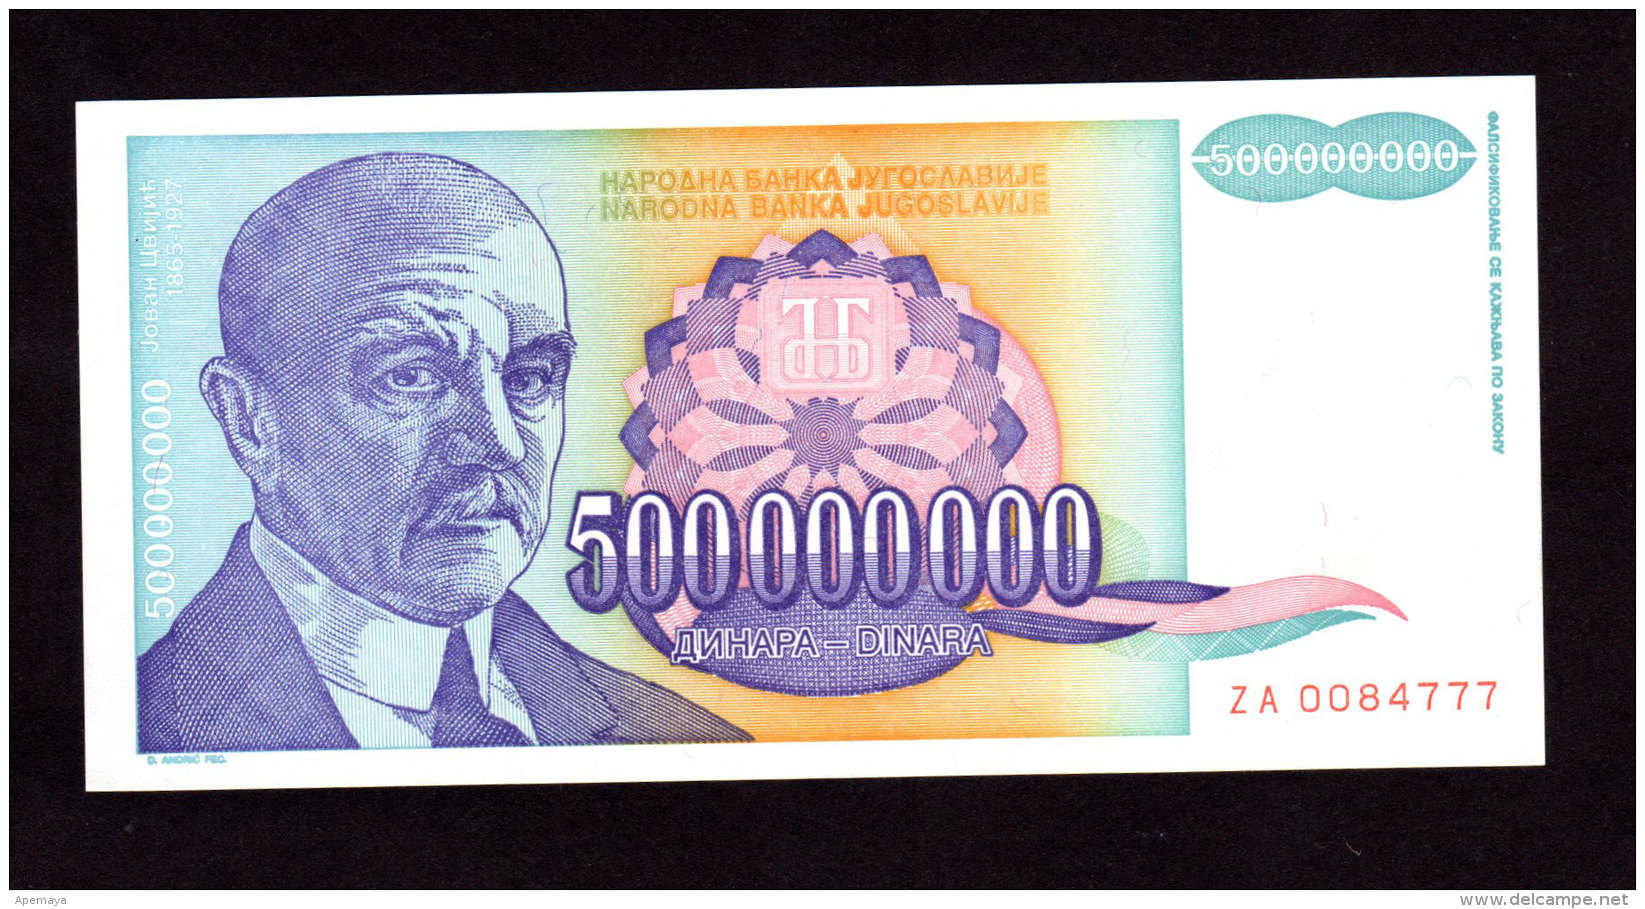 Replacement. Jugoslavia 500000000 Dinara ZA 1993. UNC!!!! - Jugoslavia